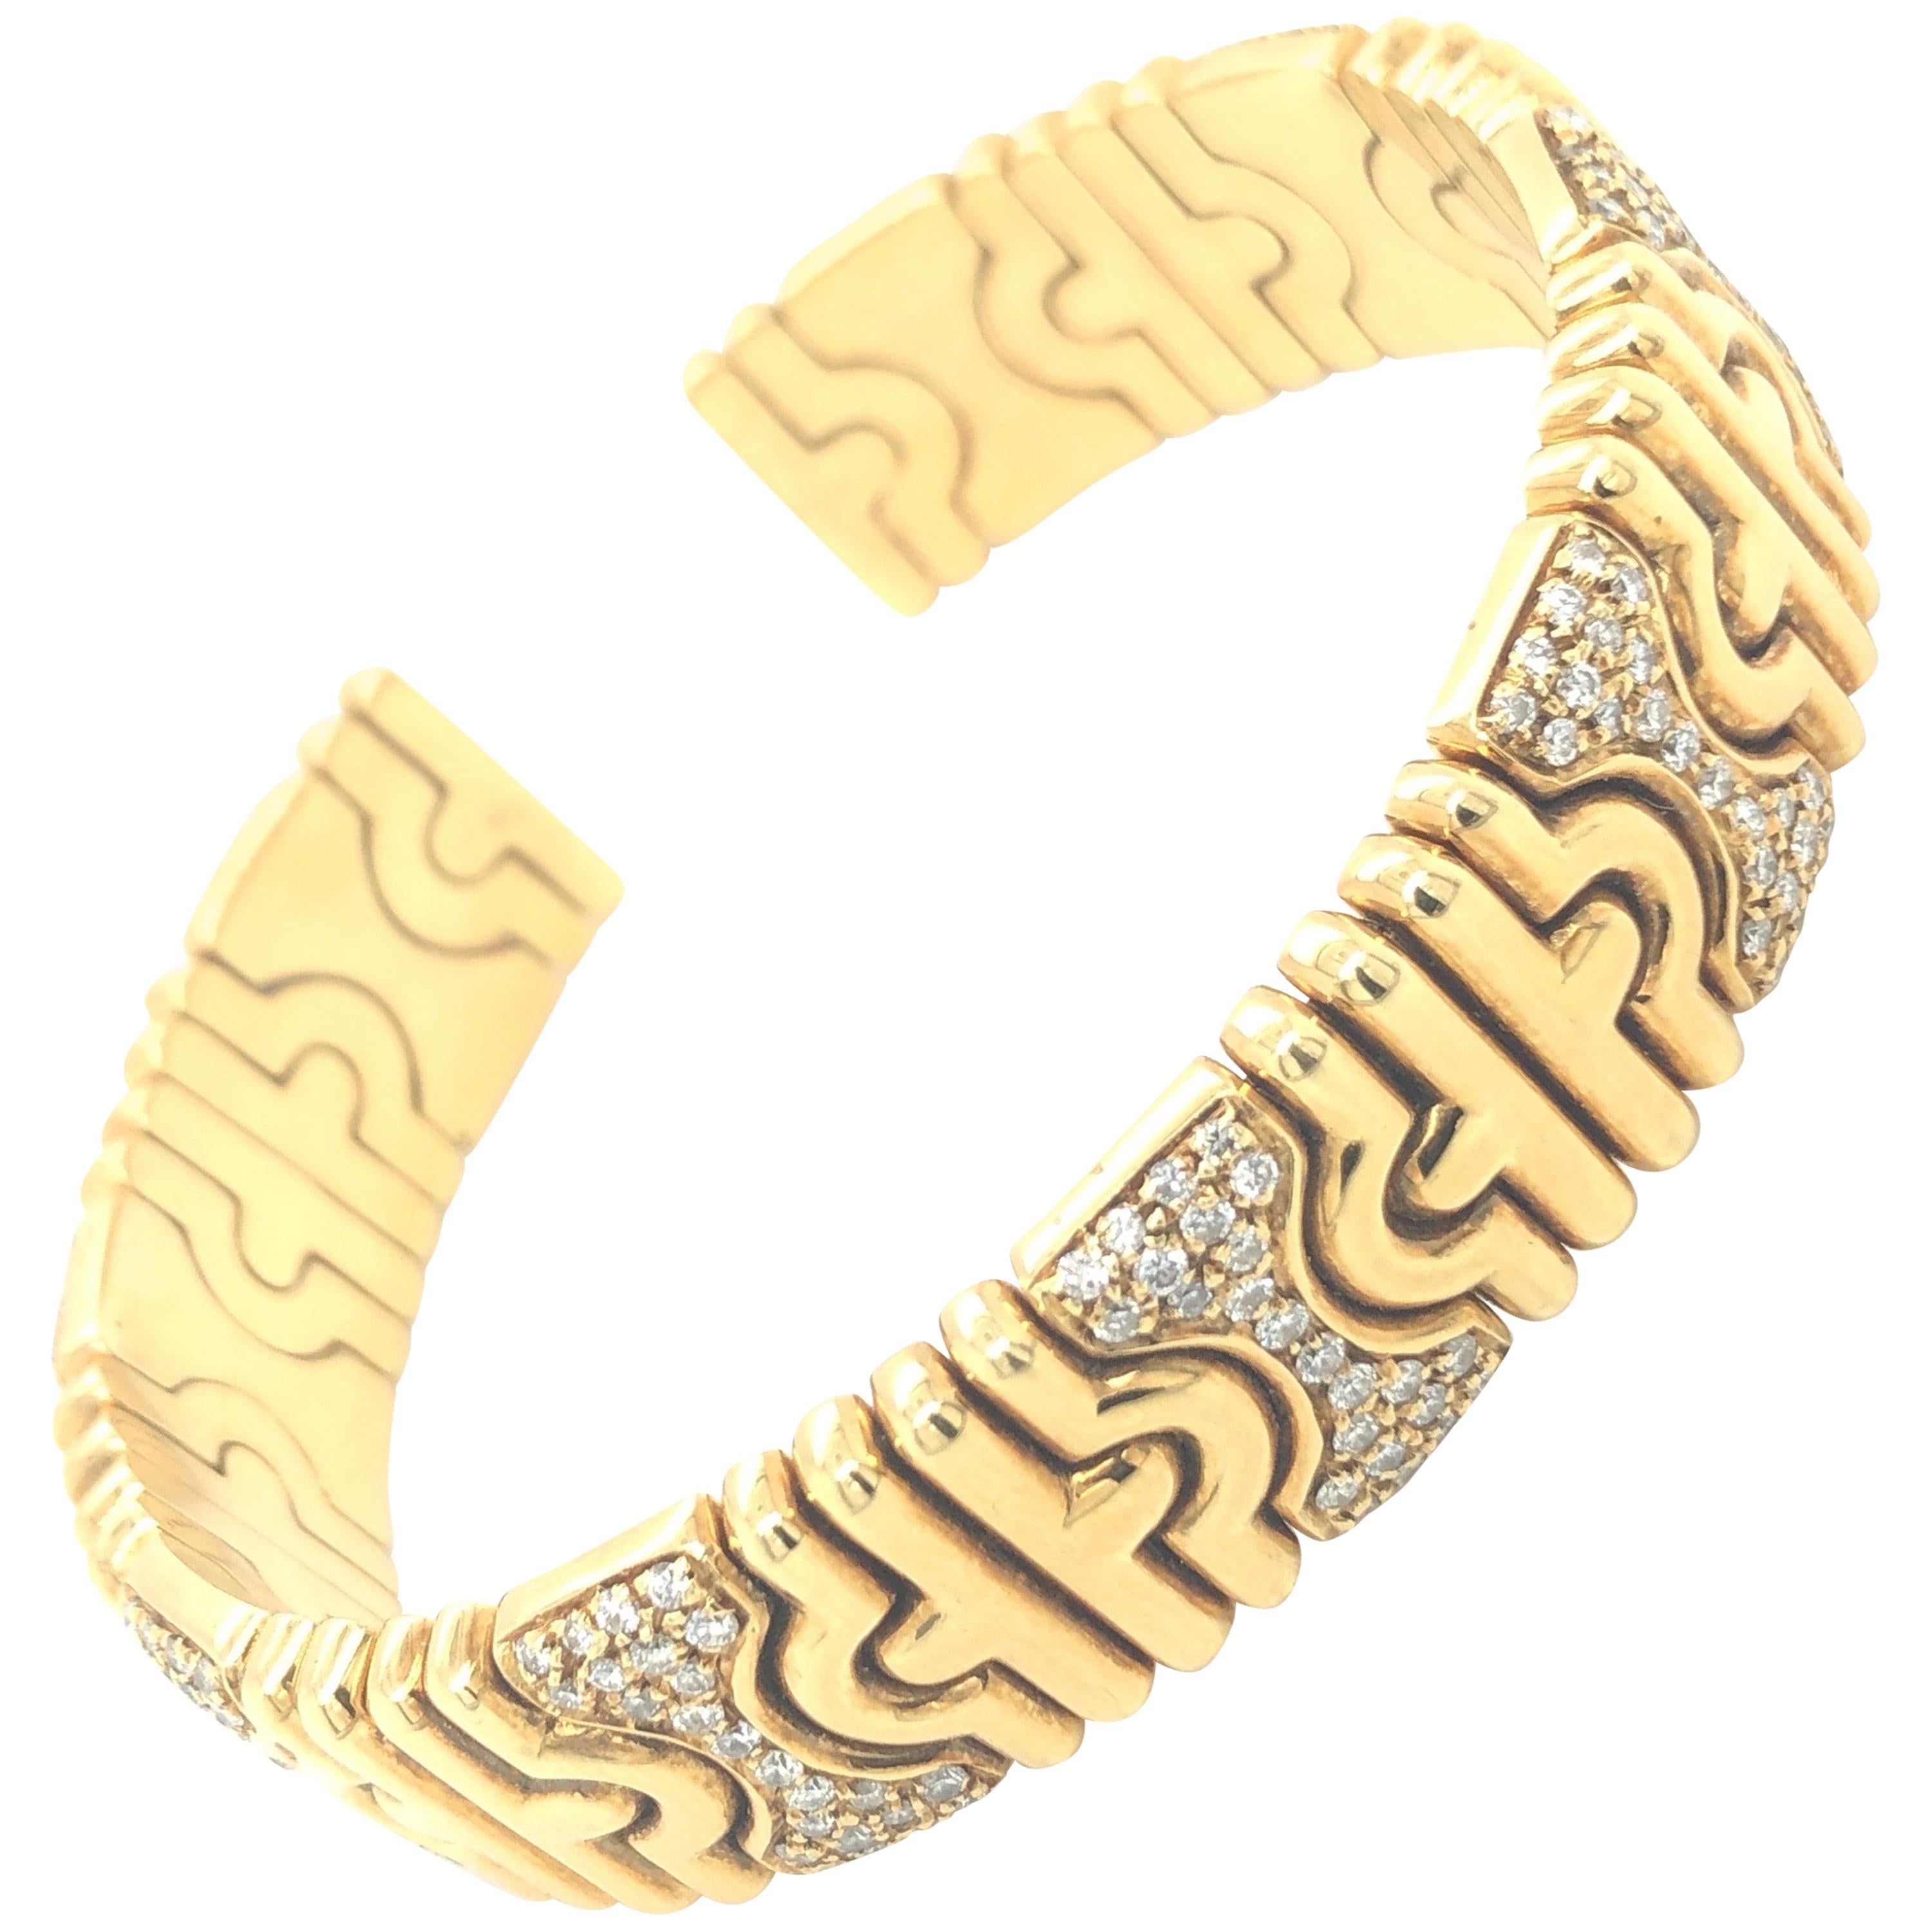 Chatila Yellow Gold Cuff Bracelet with Diamonds